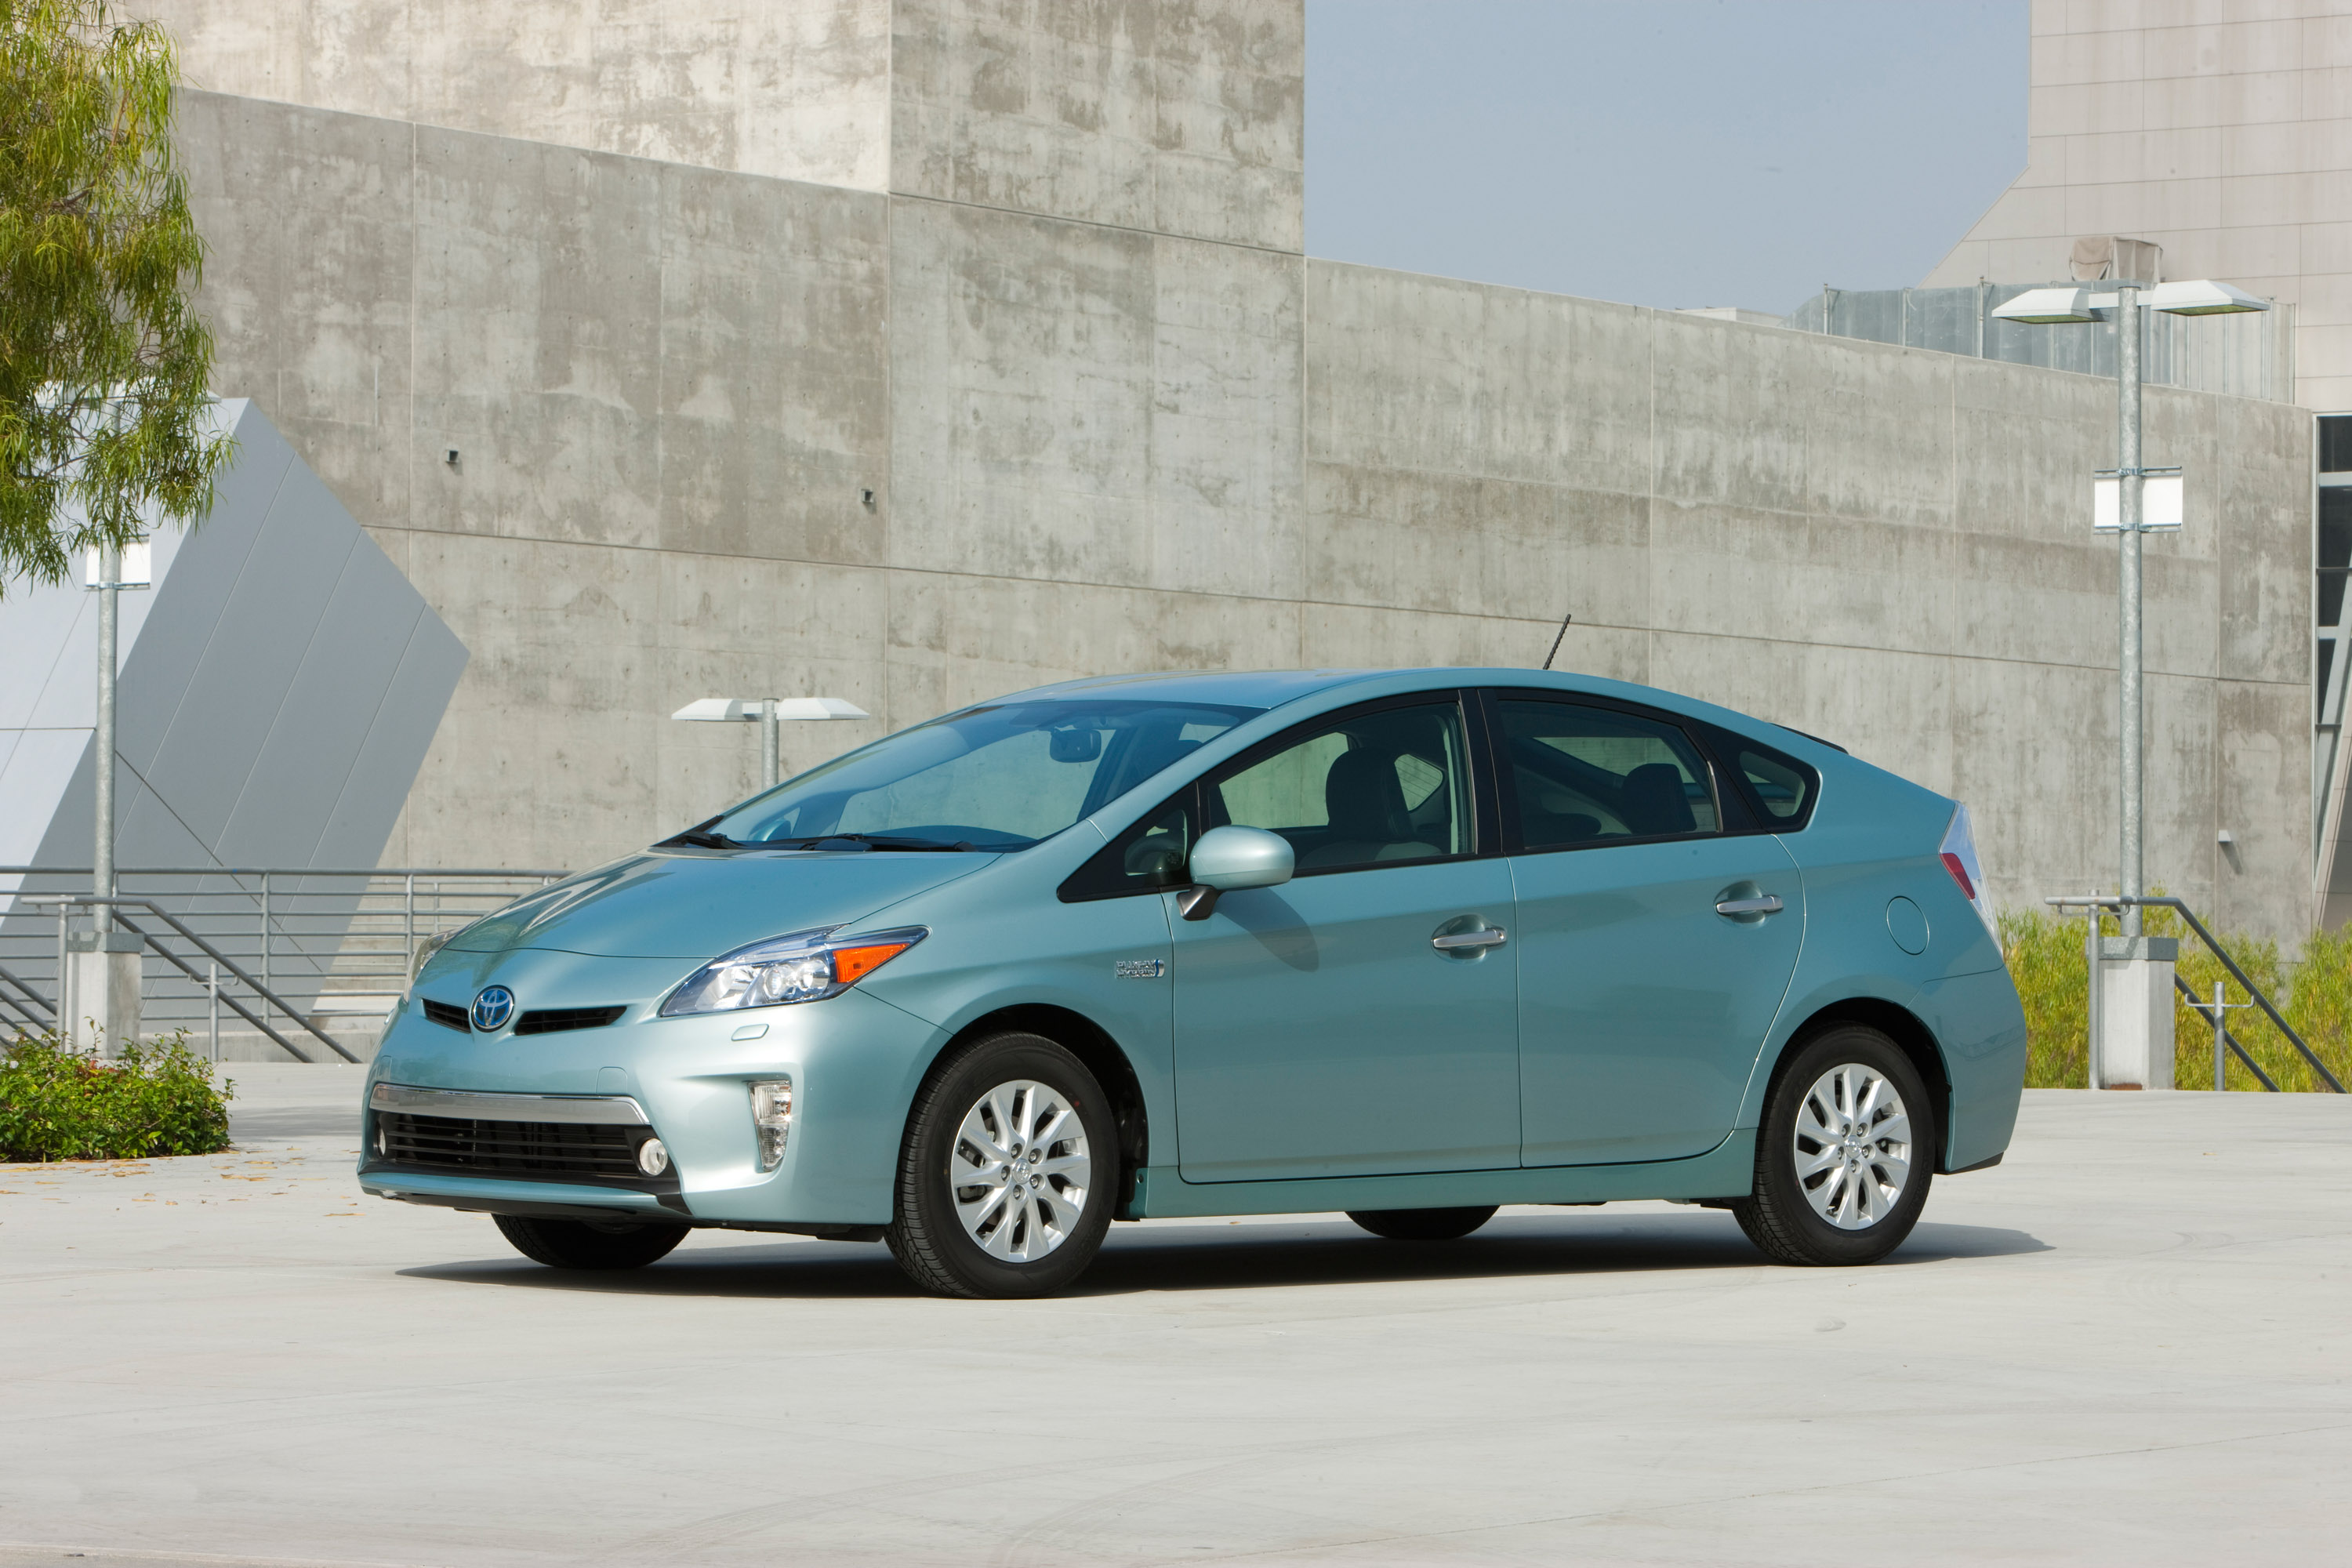 2013 Toyota Prius Plug-In Product Information - Toyota USA Newsroom